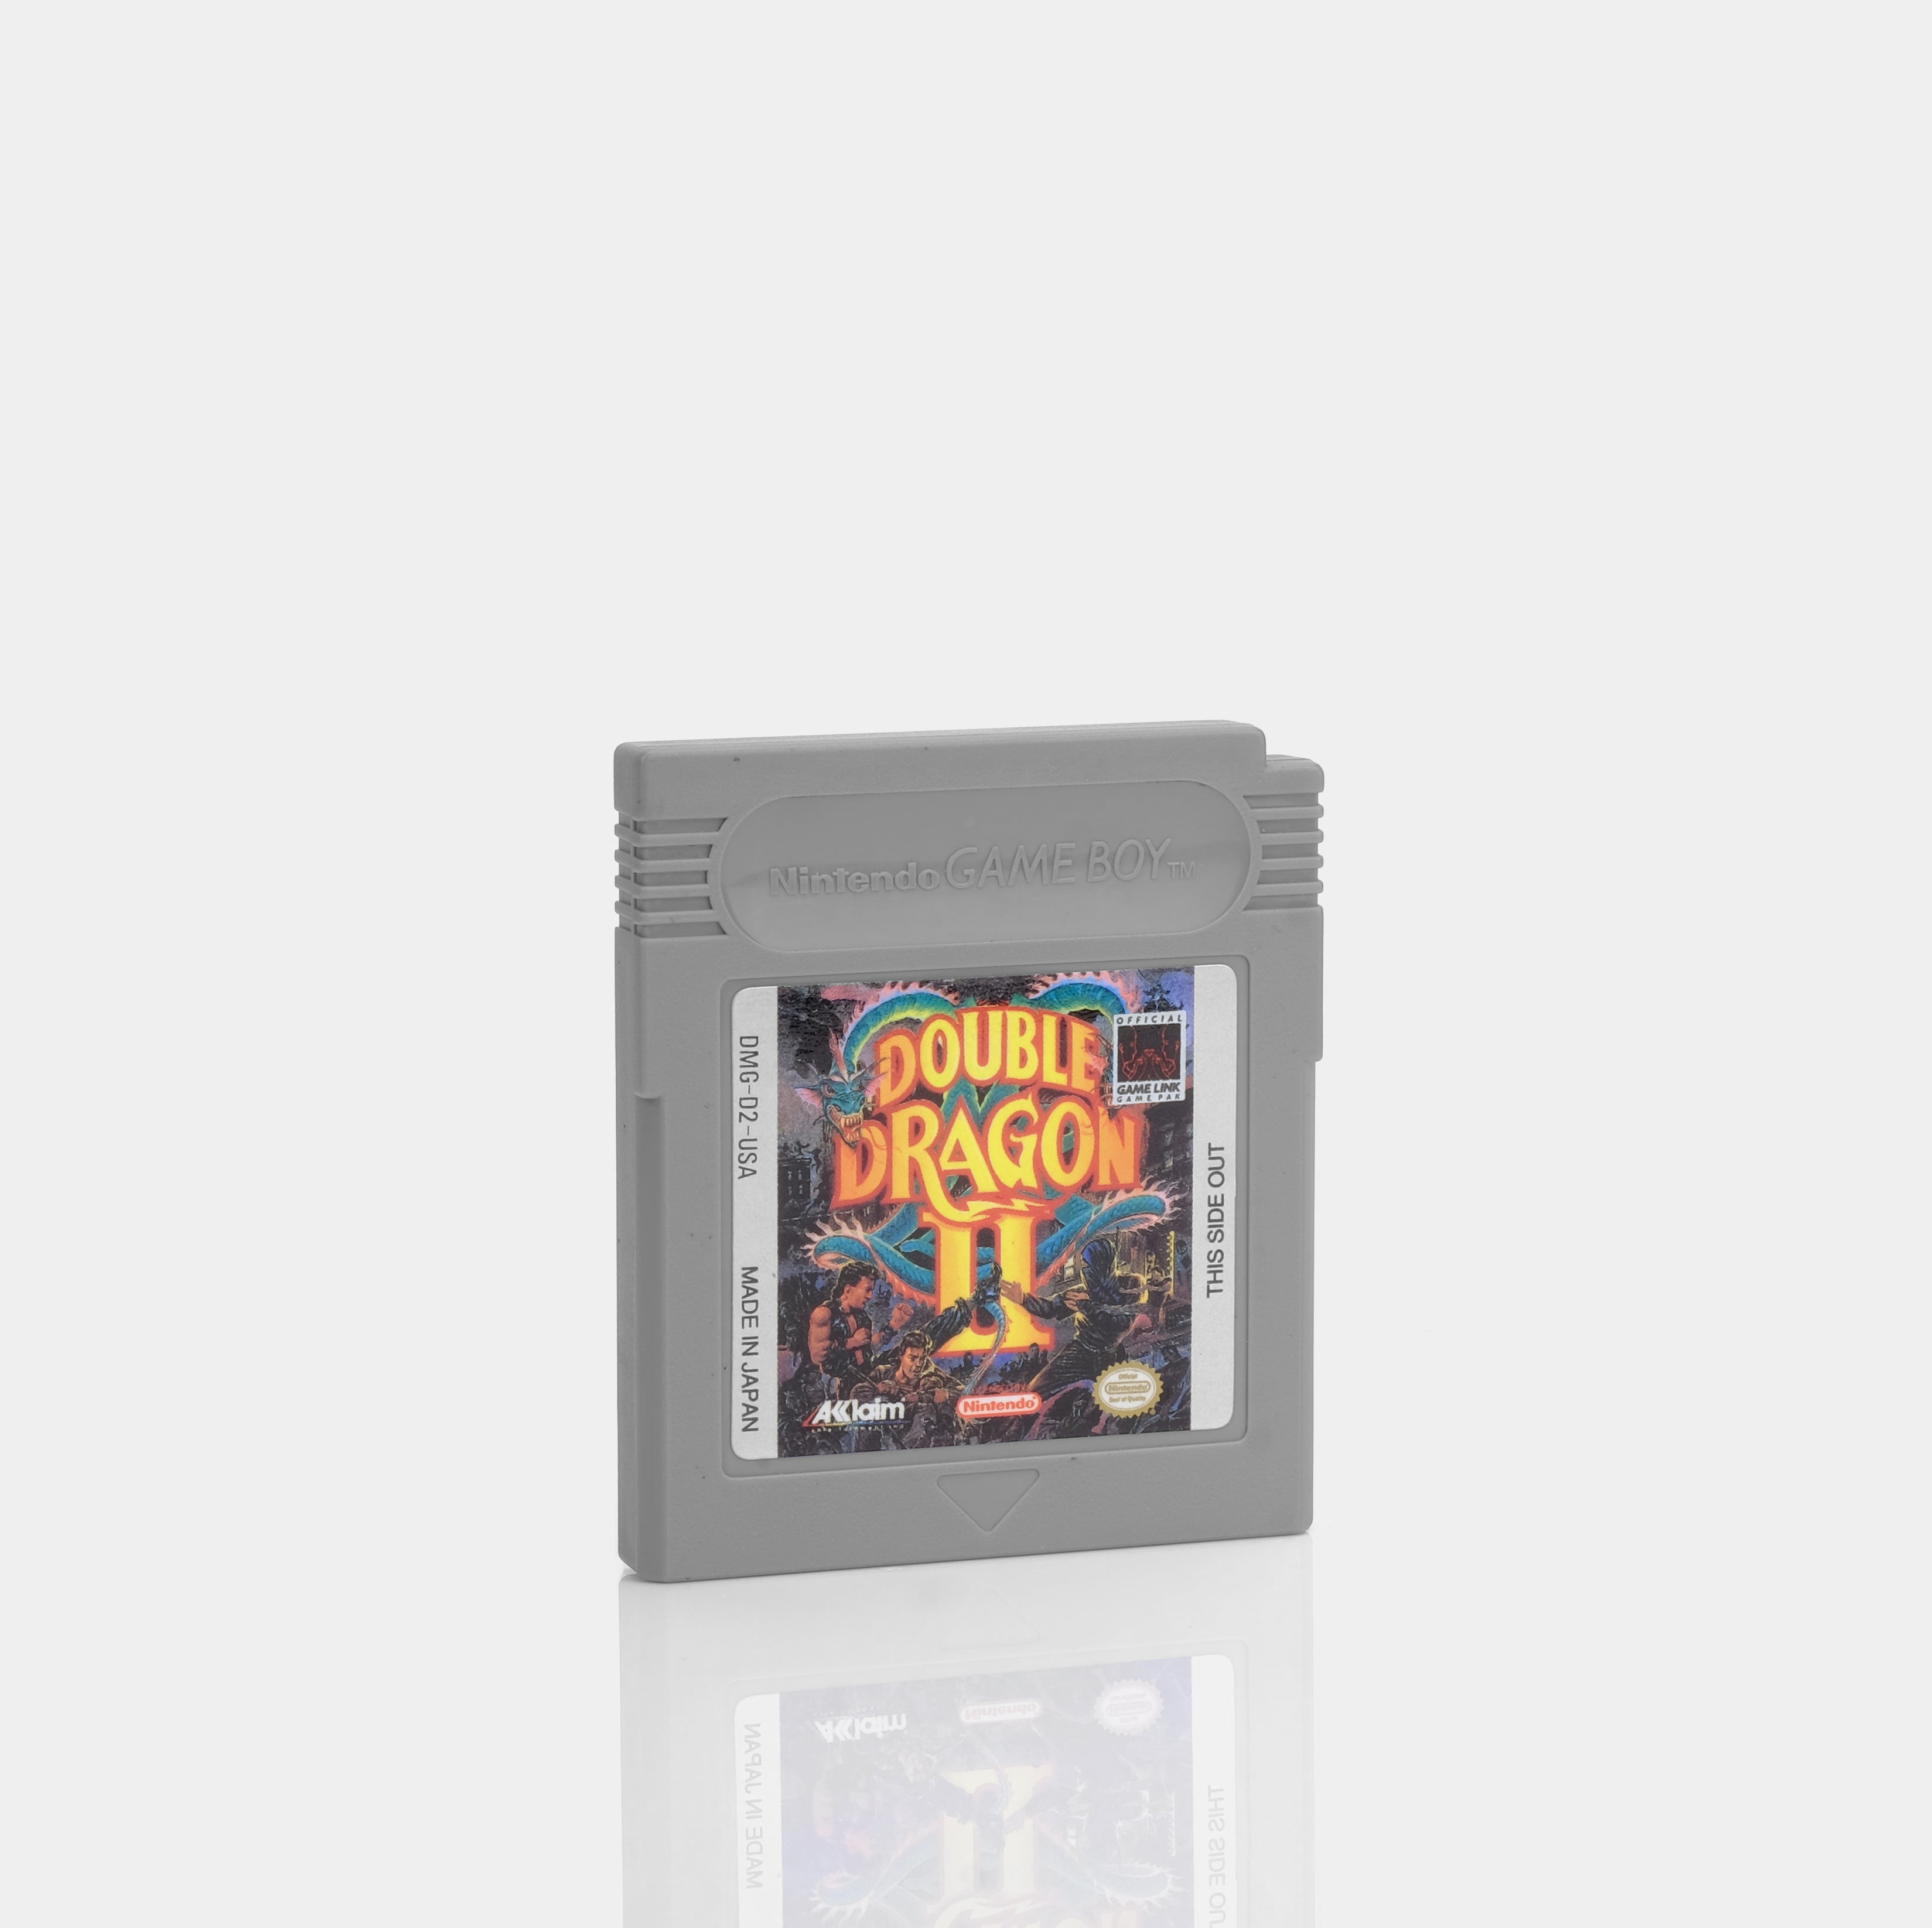 Double Dragon 2 (1991) Game Boy Game